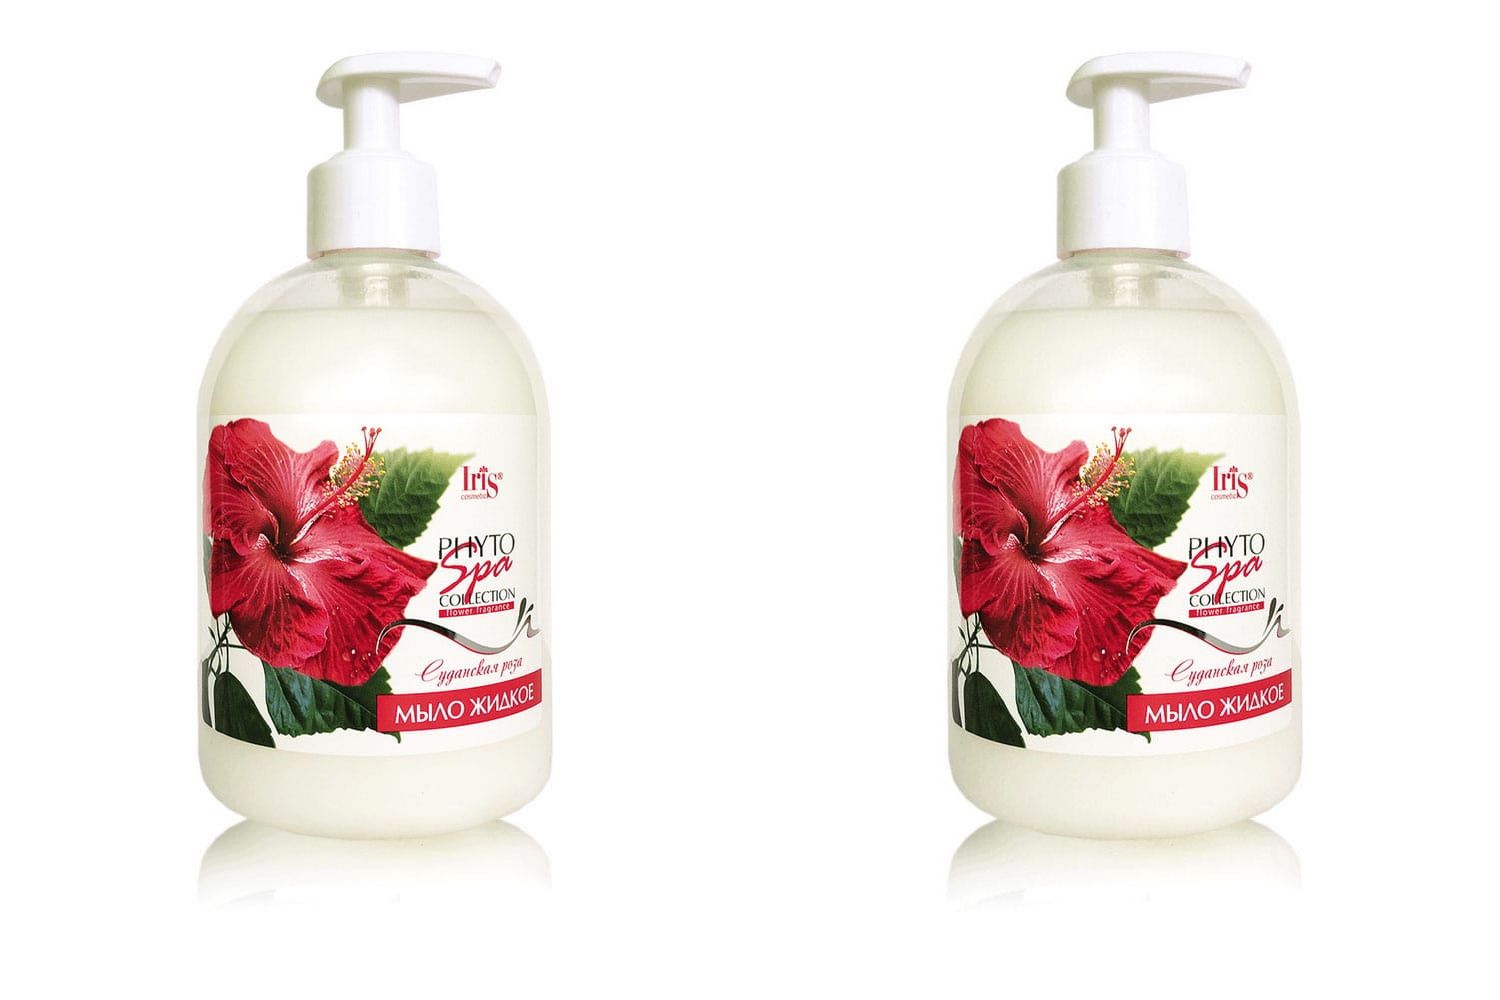 Жидкое мыло Iris Phyto Spa Fragrance, Суданская Роза, флакон с дозатором, 500 мл, 2 шт